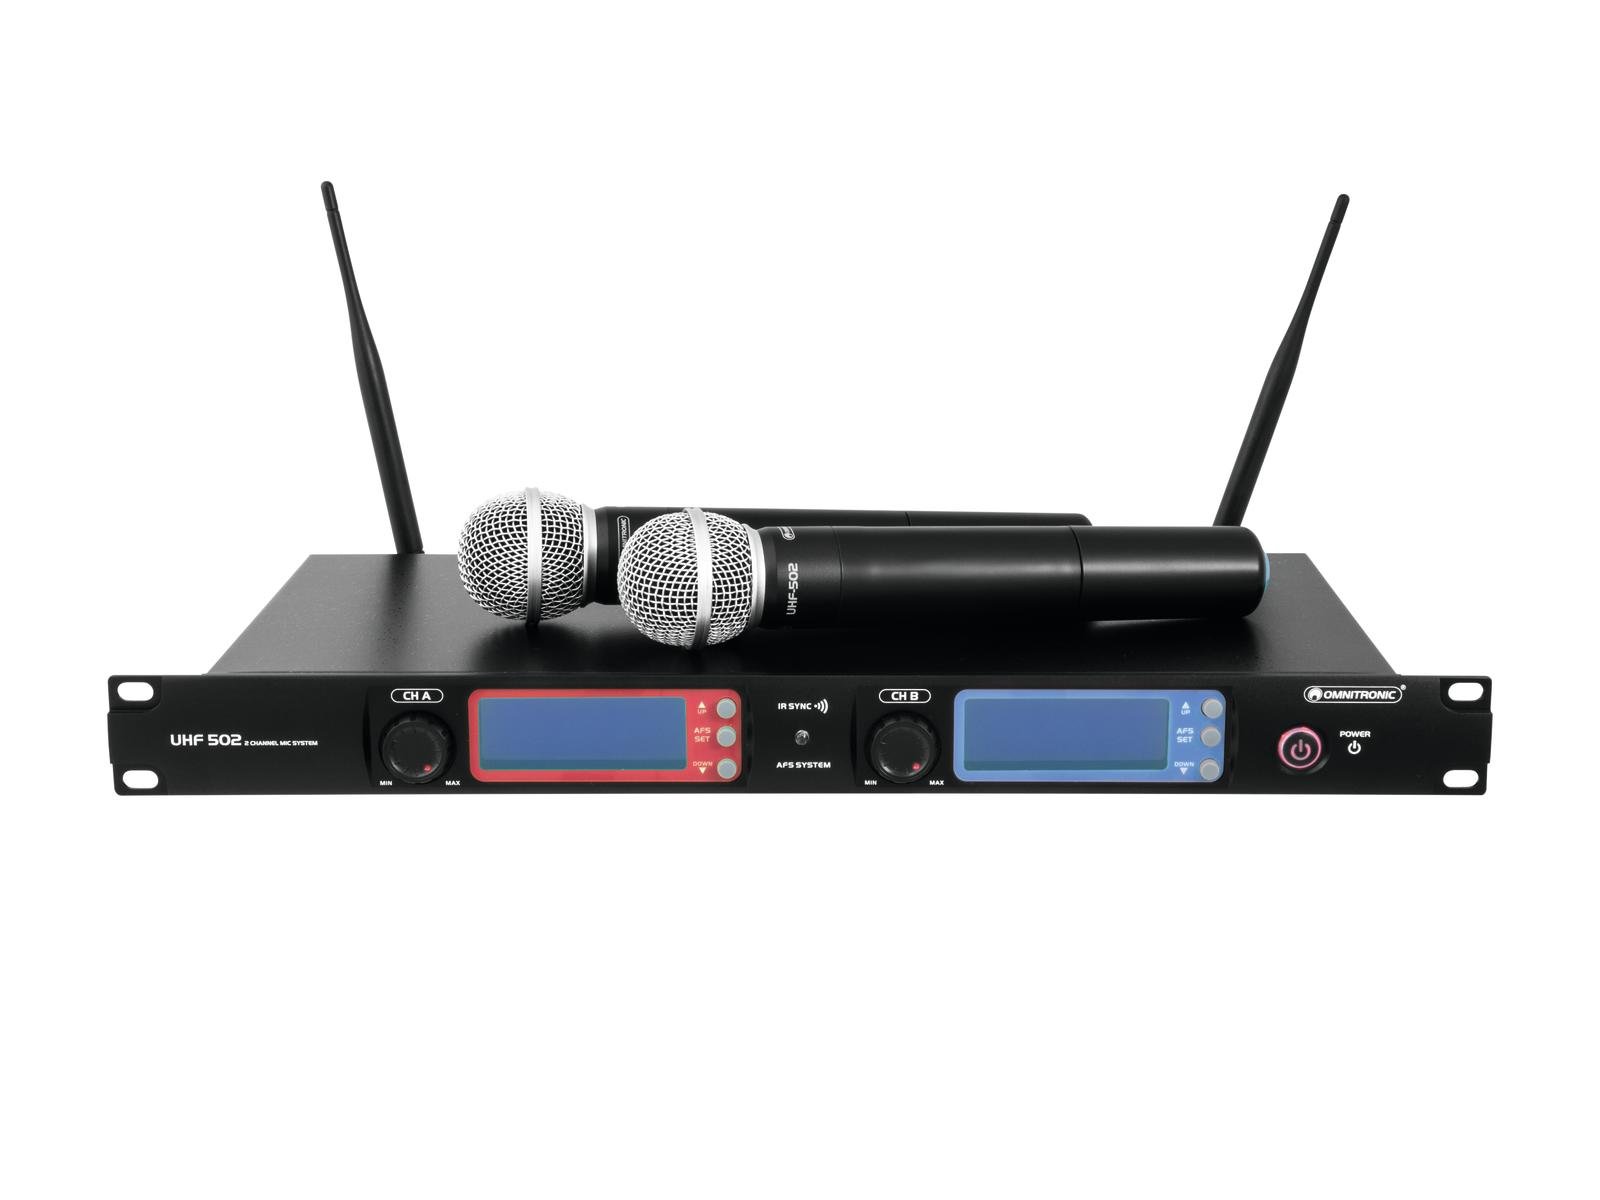 OMNITRONIC Système de microphone portable UHF-E4 823,6/826,1/828,6/831,1 MHz